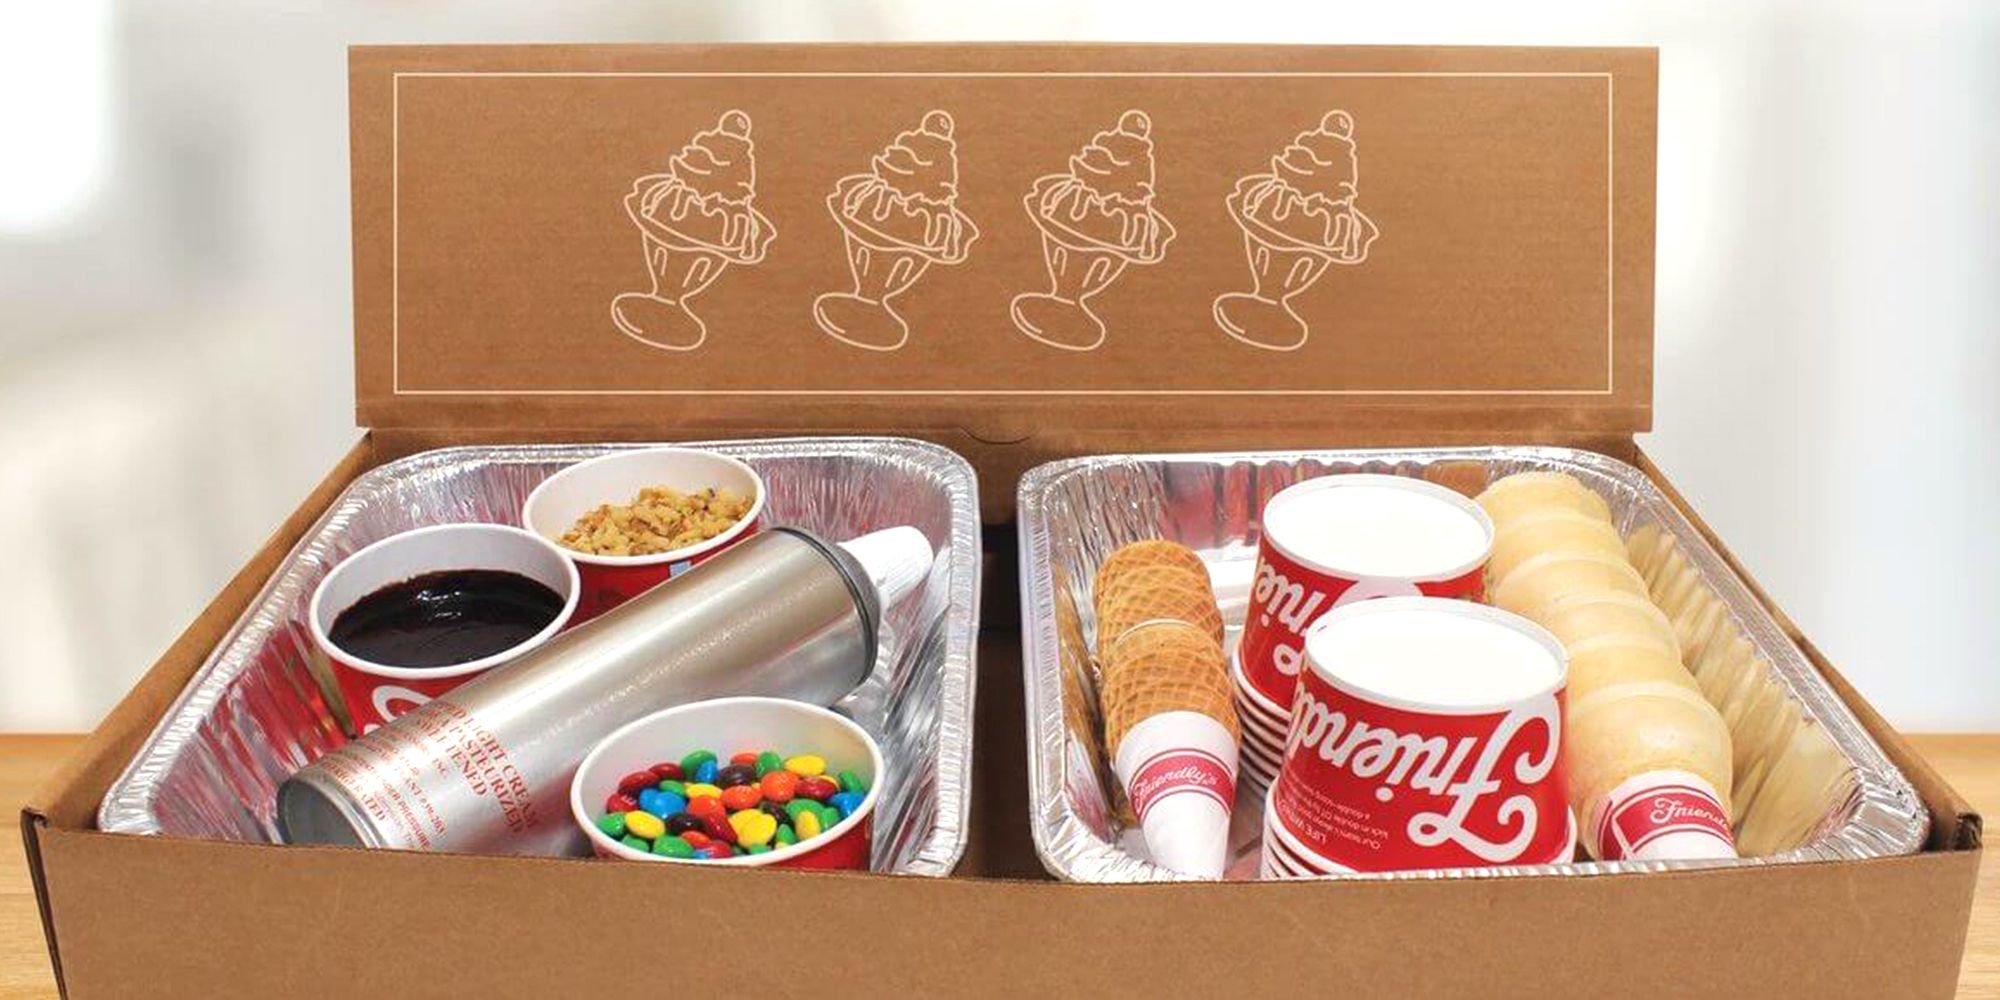 Sanders Ice Cream Sundae Kit Gift Box